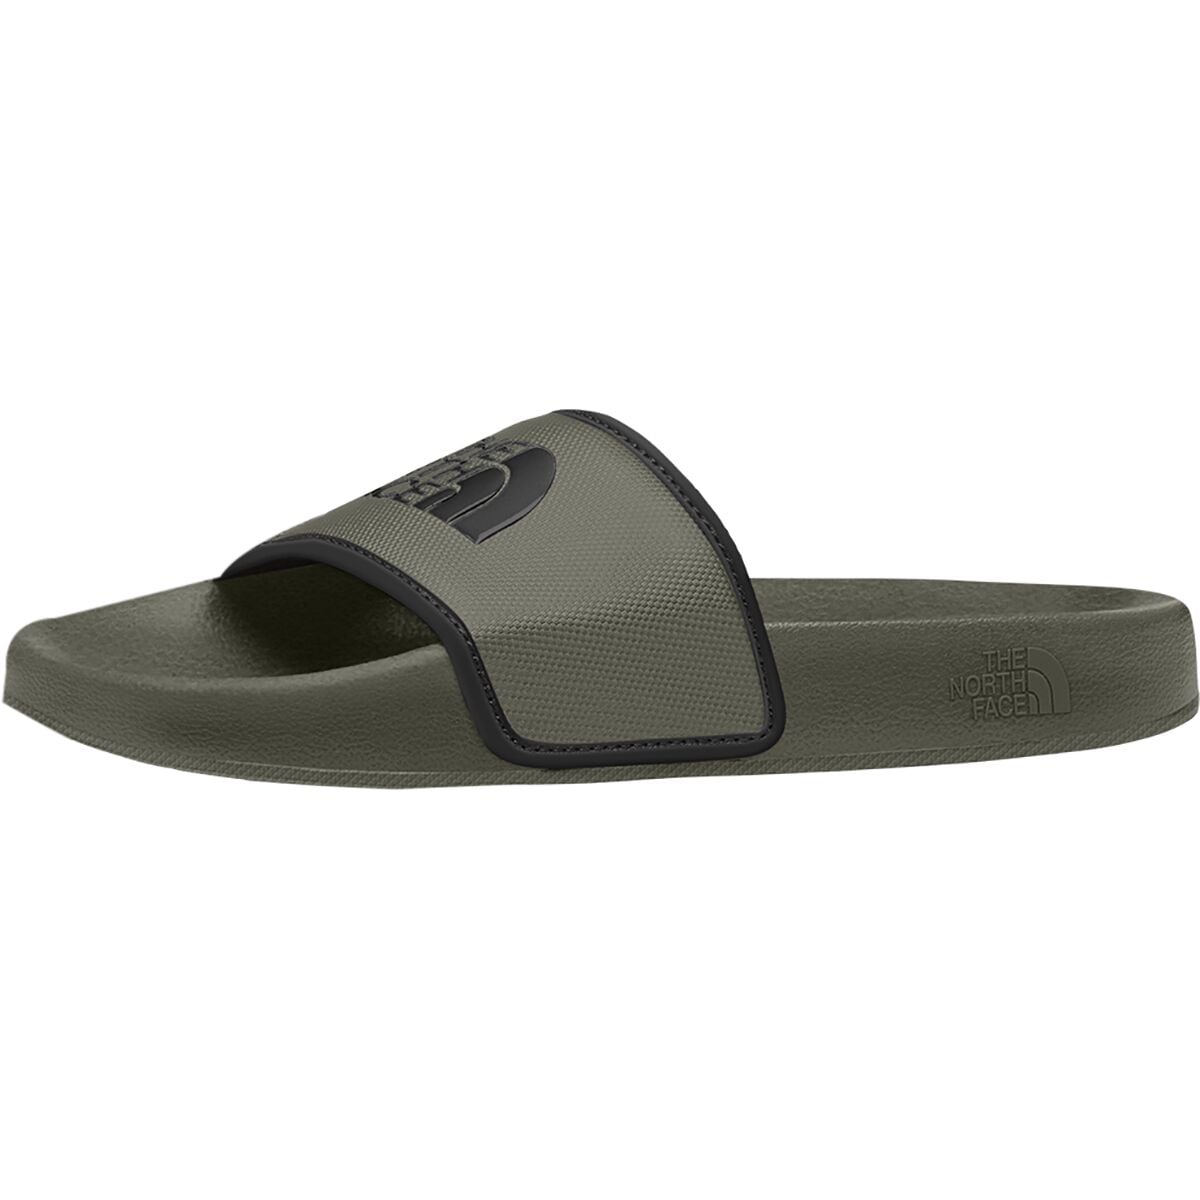 Base Camp Slide III Sandal - Men